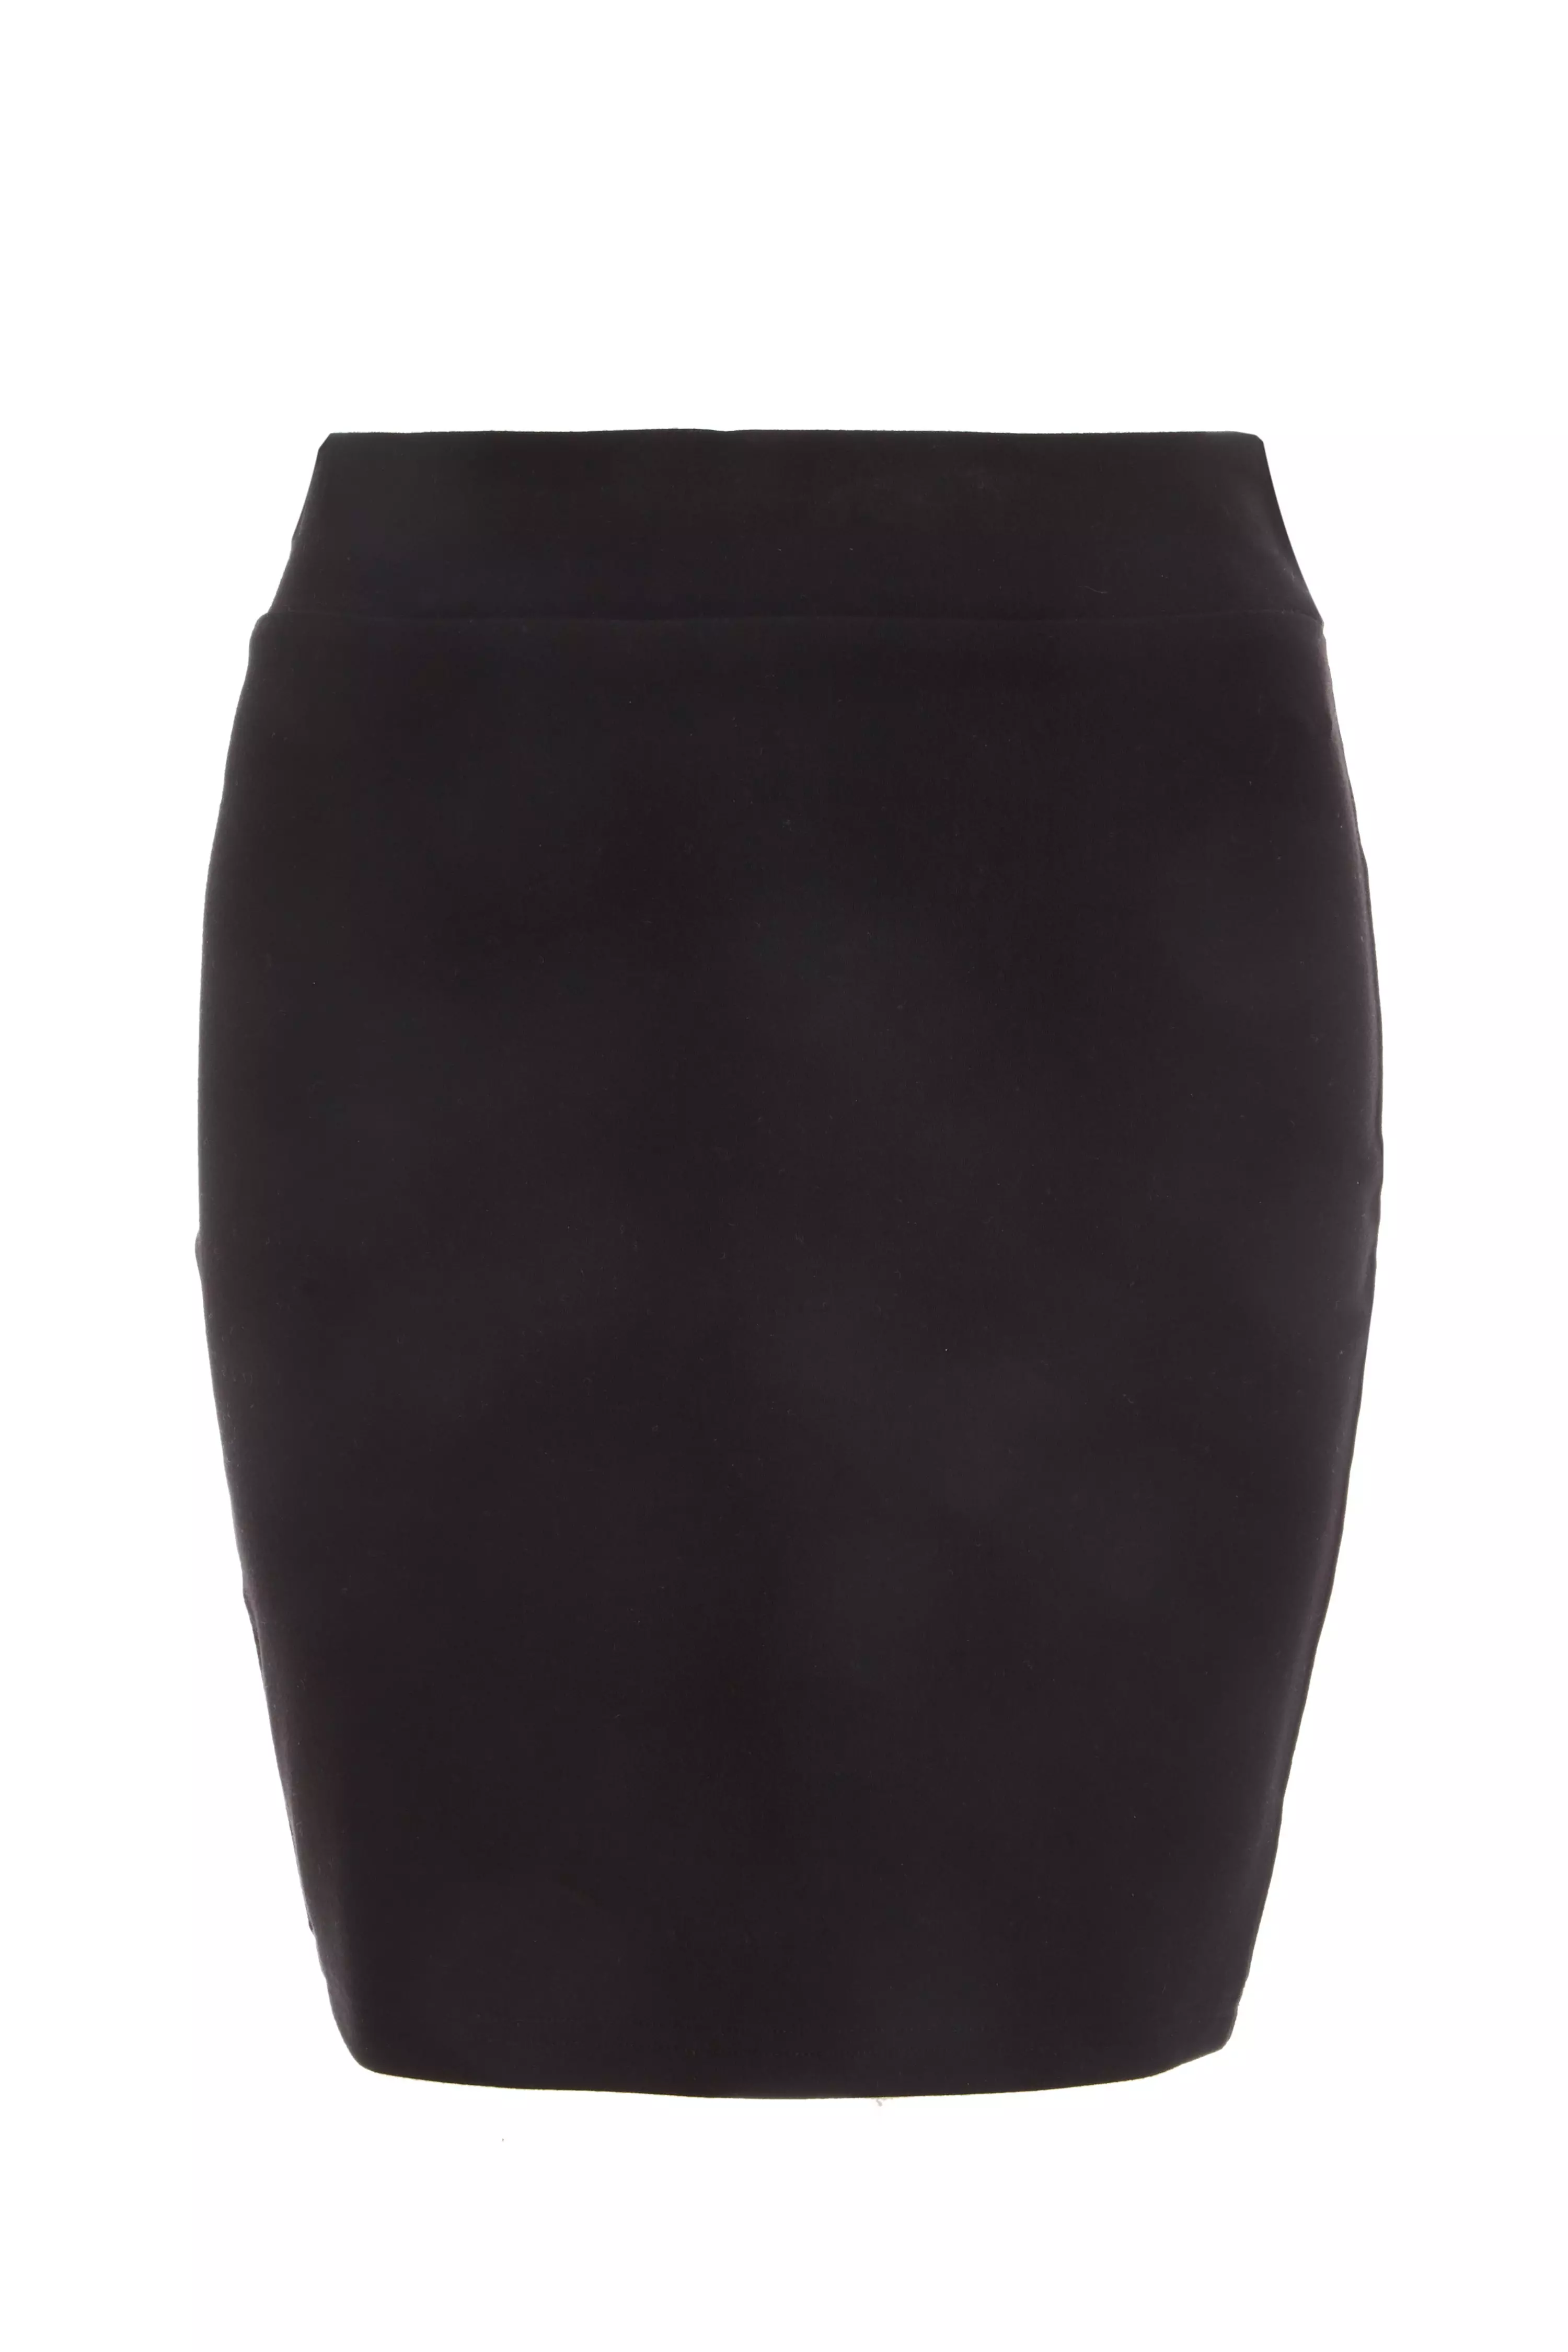 Black Stretch Bodycon Mini Skirt - QUIZ Clothing